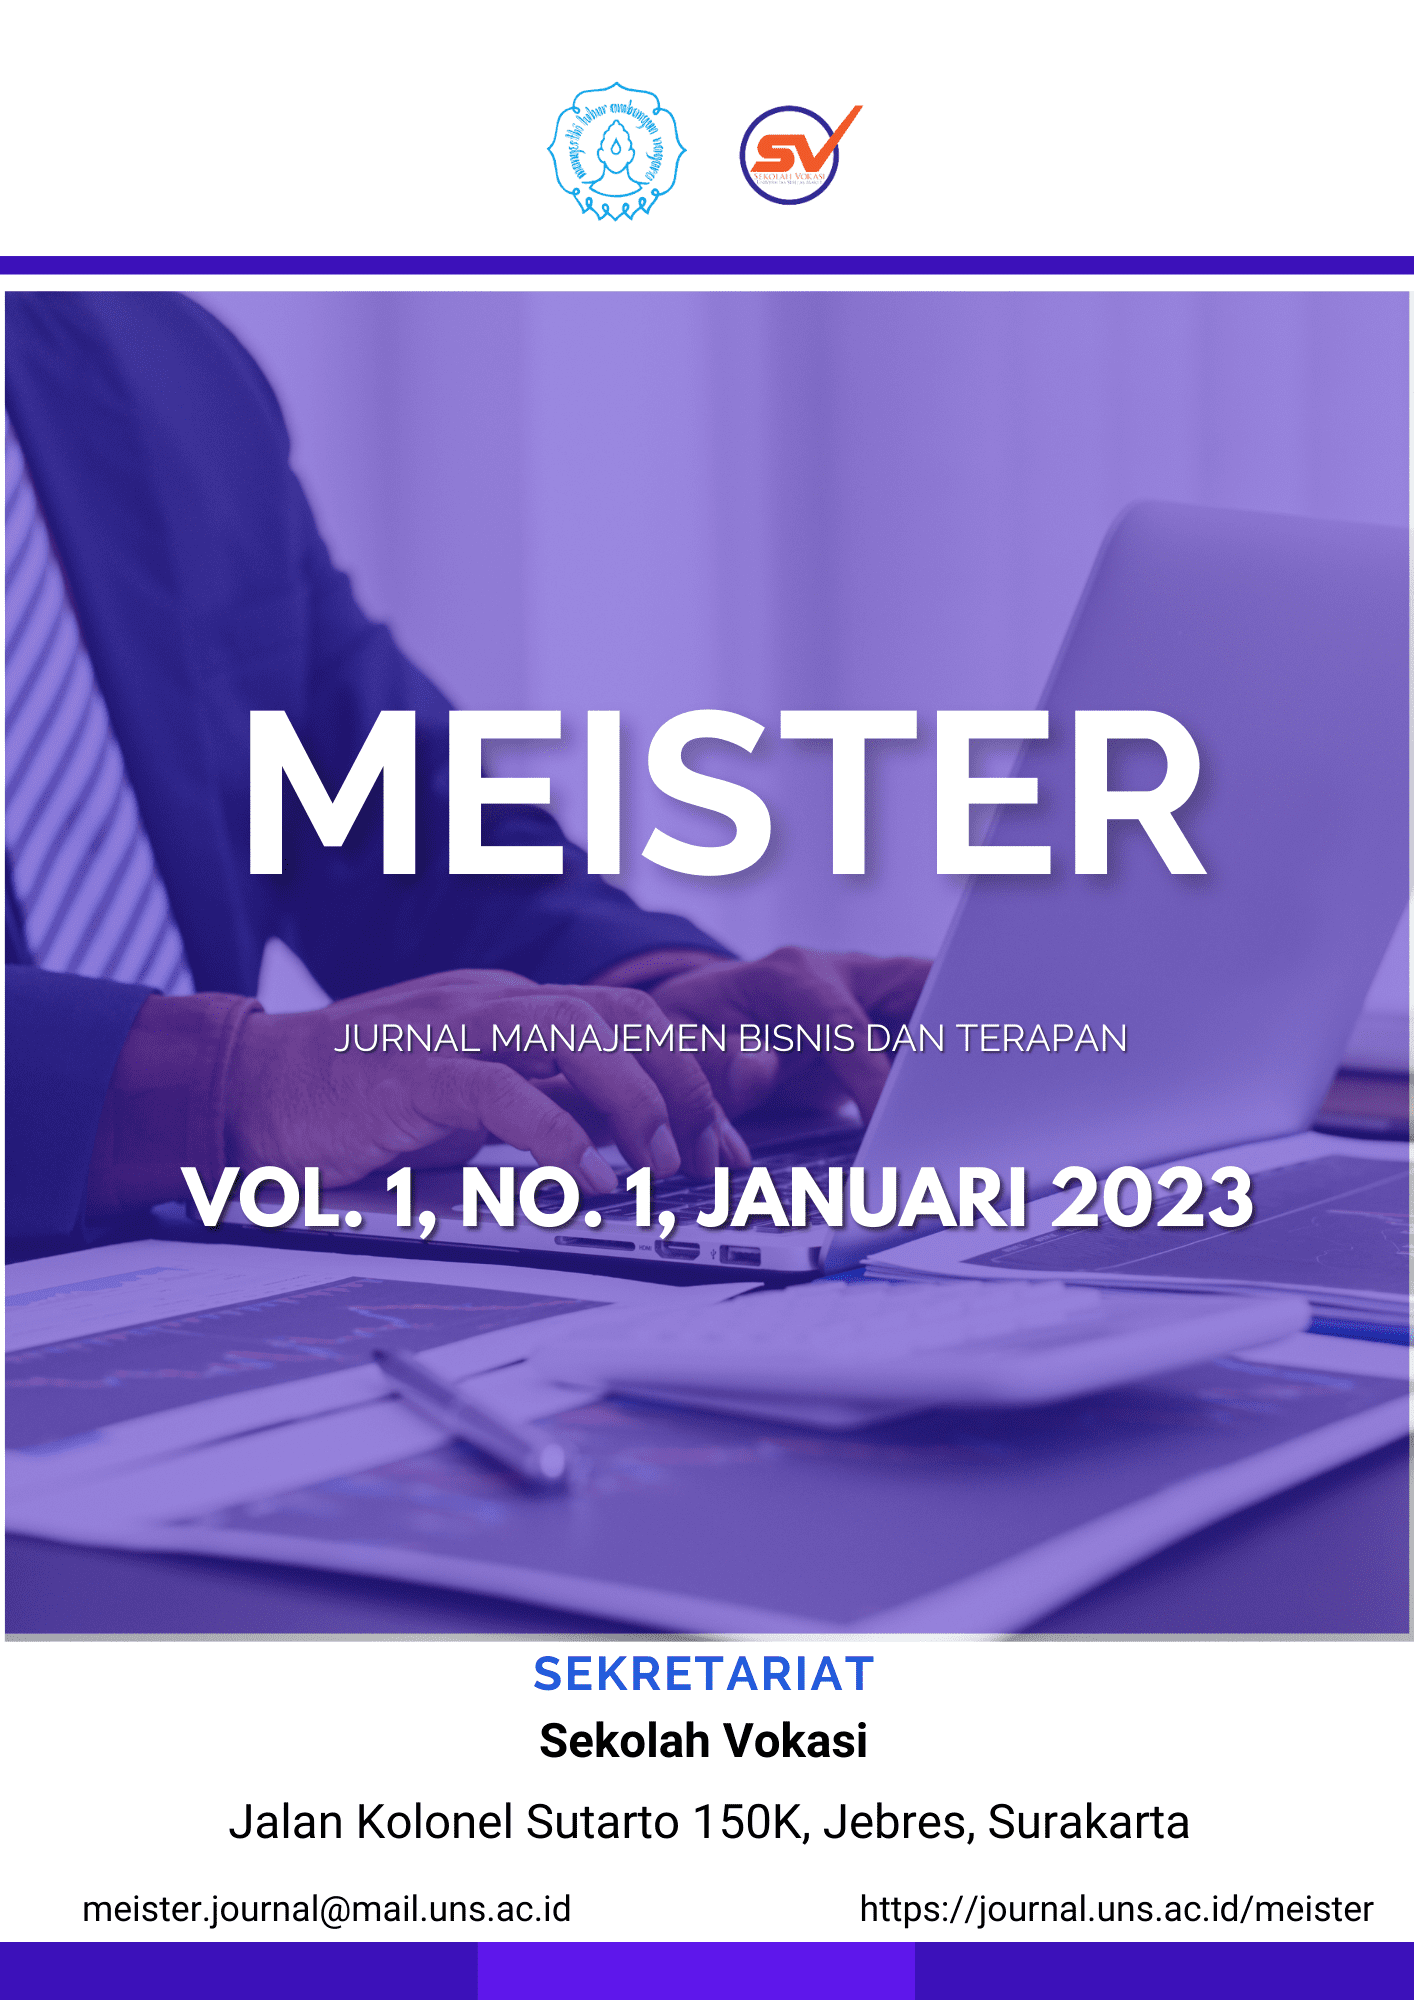 					View Vol. 1 No. 1 (2023): MEISTER Januari 2023
				